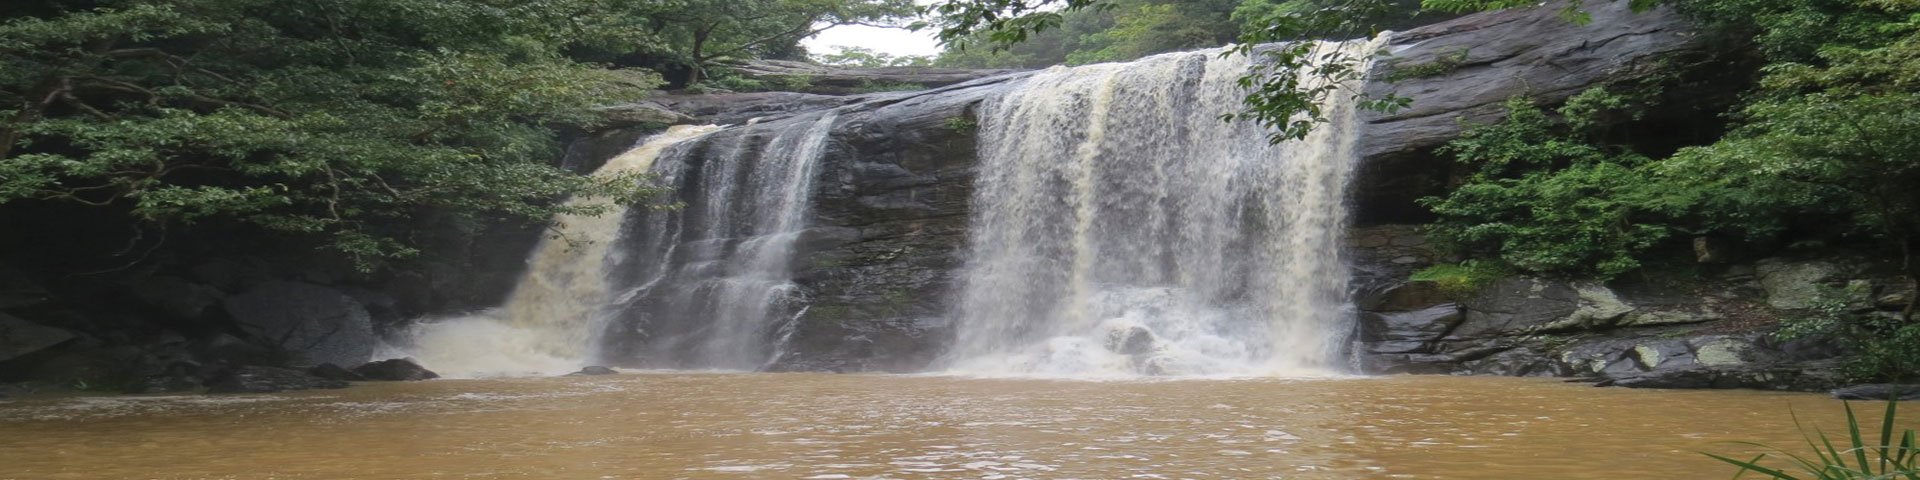 Sri Lanka Chasing Waterfalls